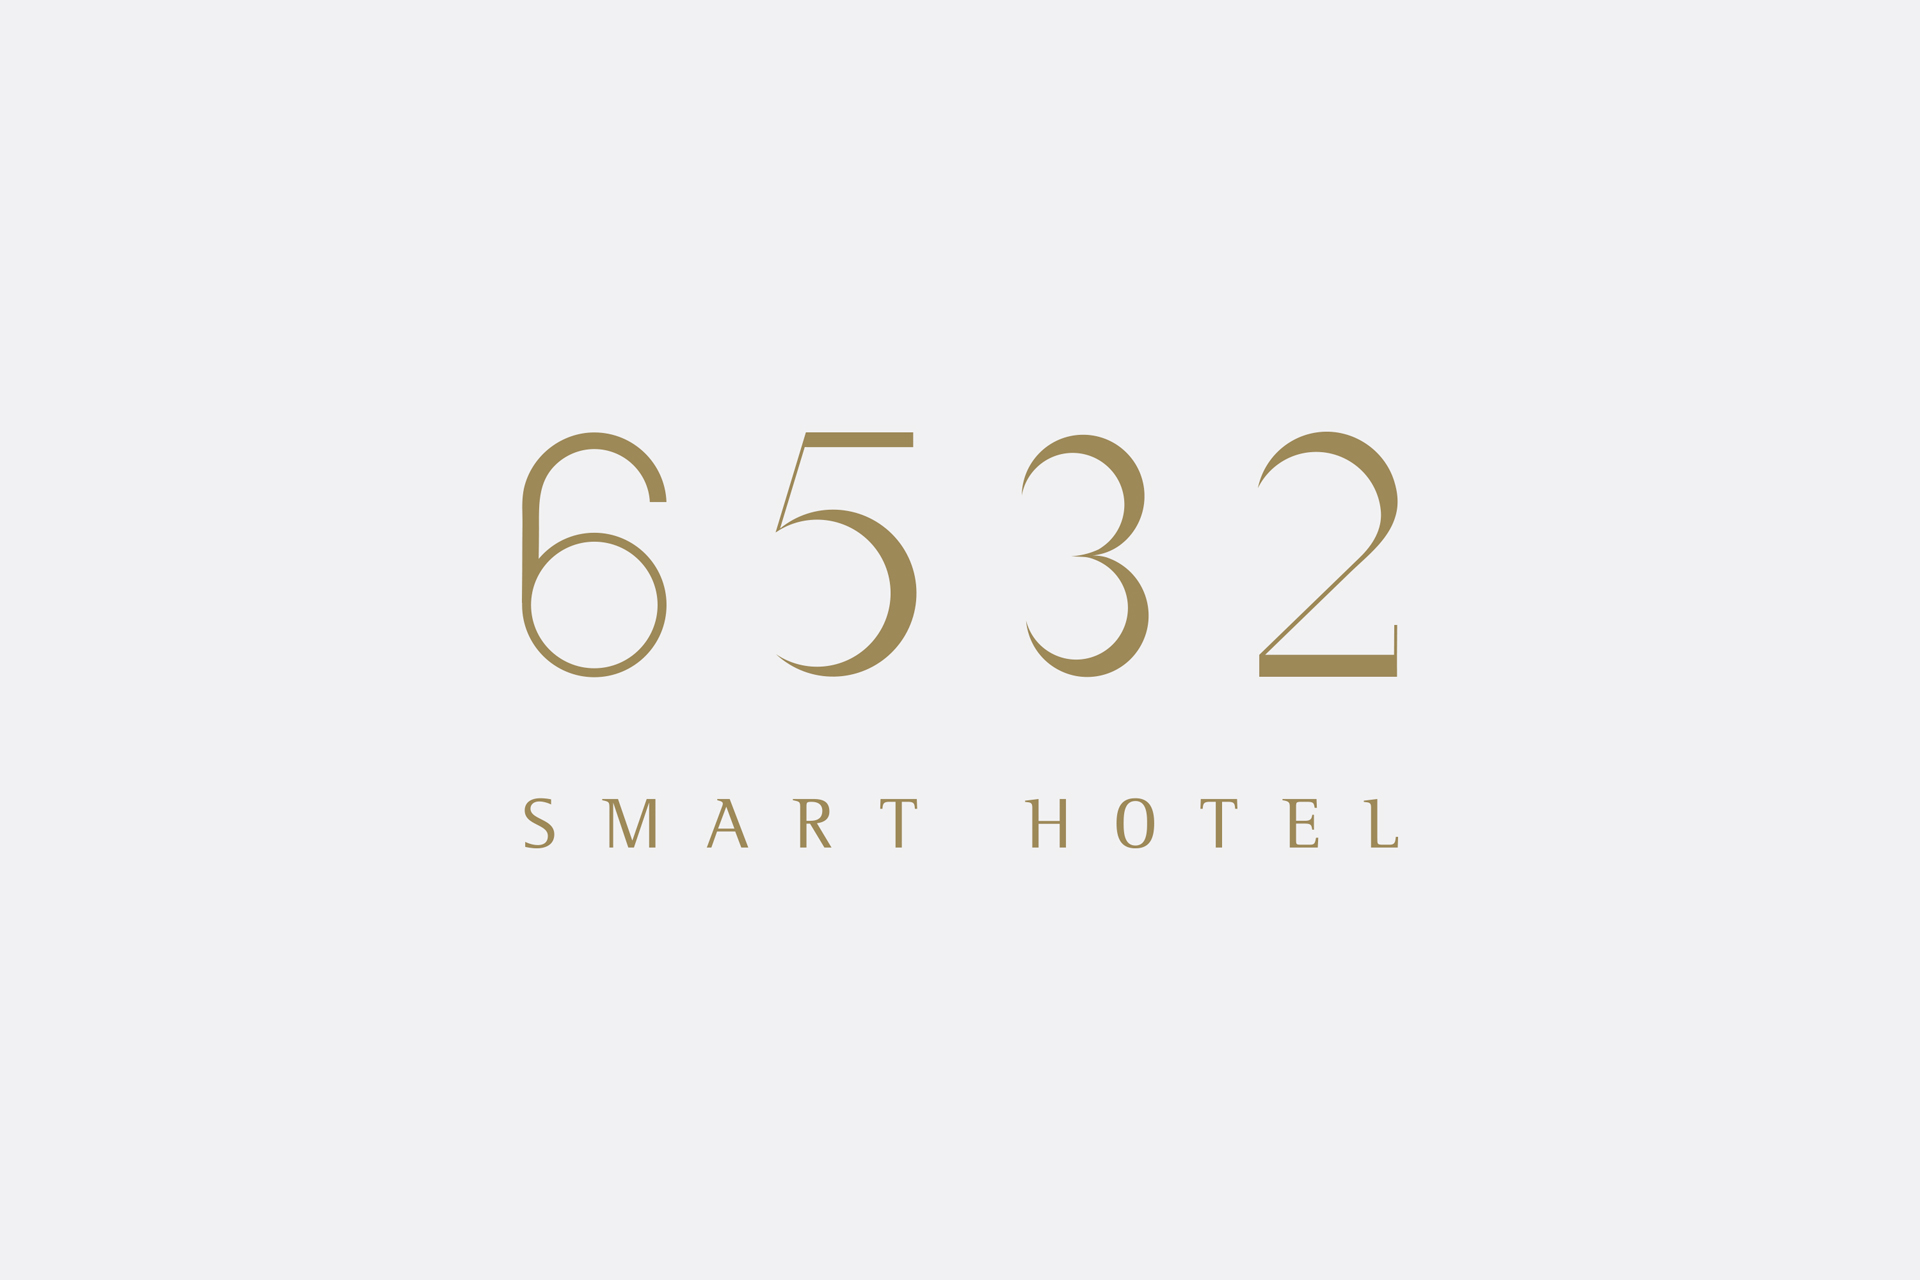 6532 Smart Hotel